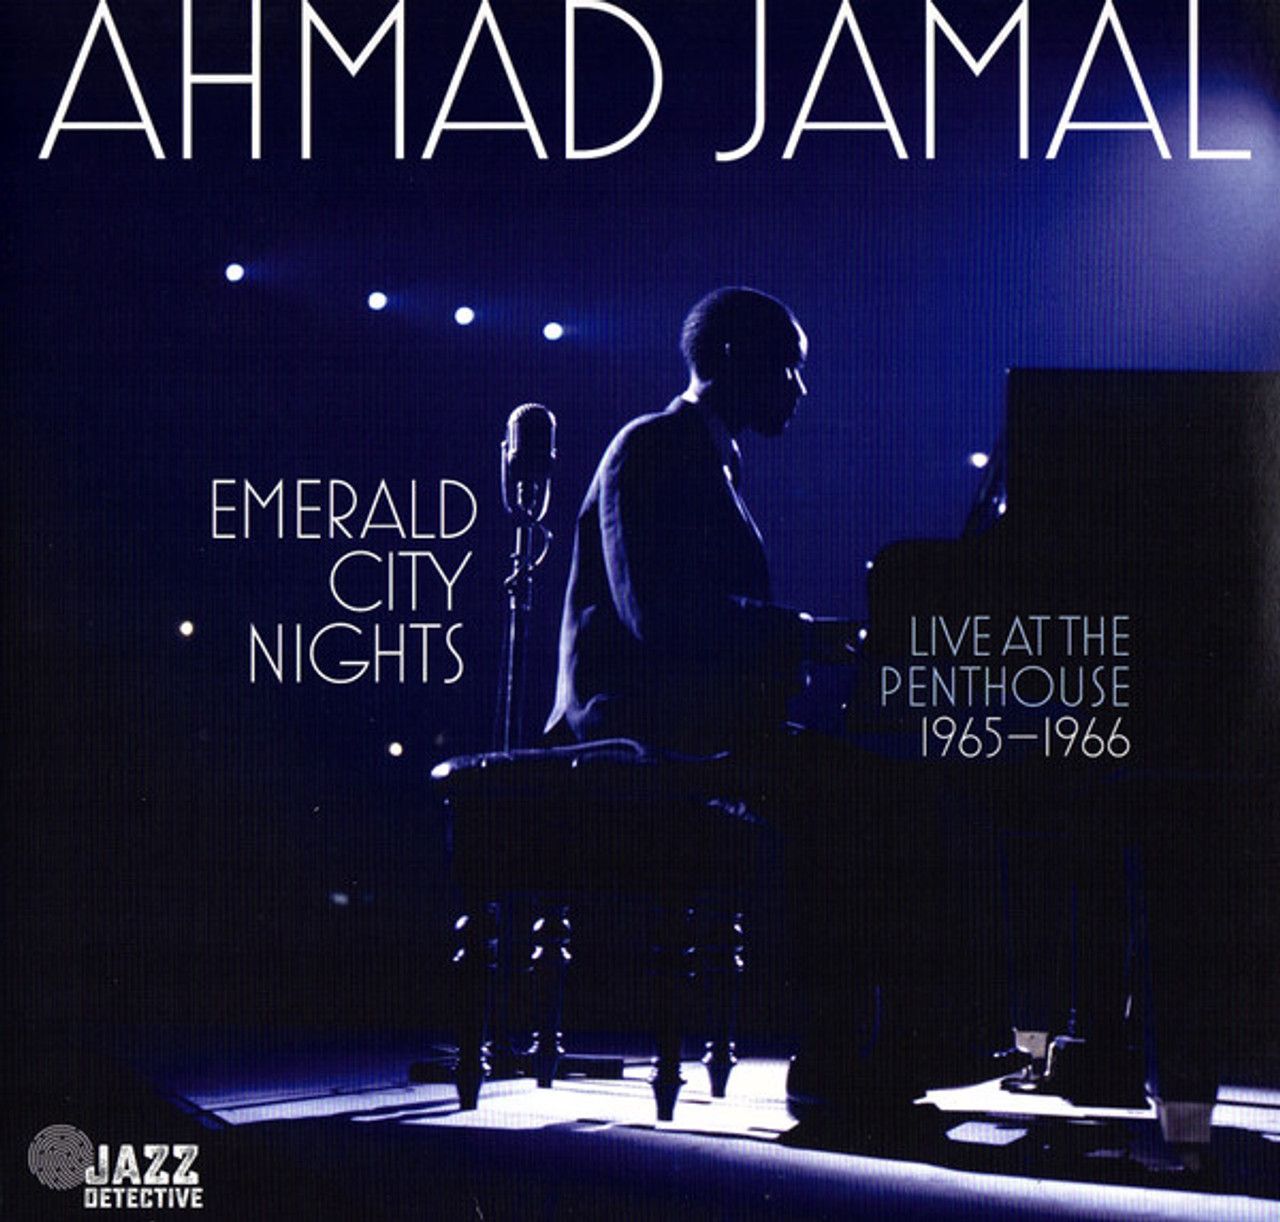 8435395503539 виниловая пластинка jamal ahmad emerald city nights live at the penthouse 1965 1966 8435395503539, Виниловая пластинка Jamal, Ahmad, Emerald City Nights: Live At The Penthouse 1965 - 1966